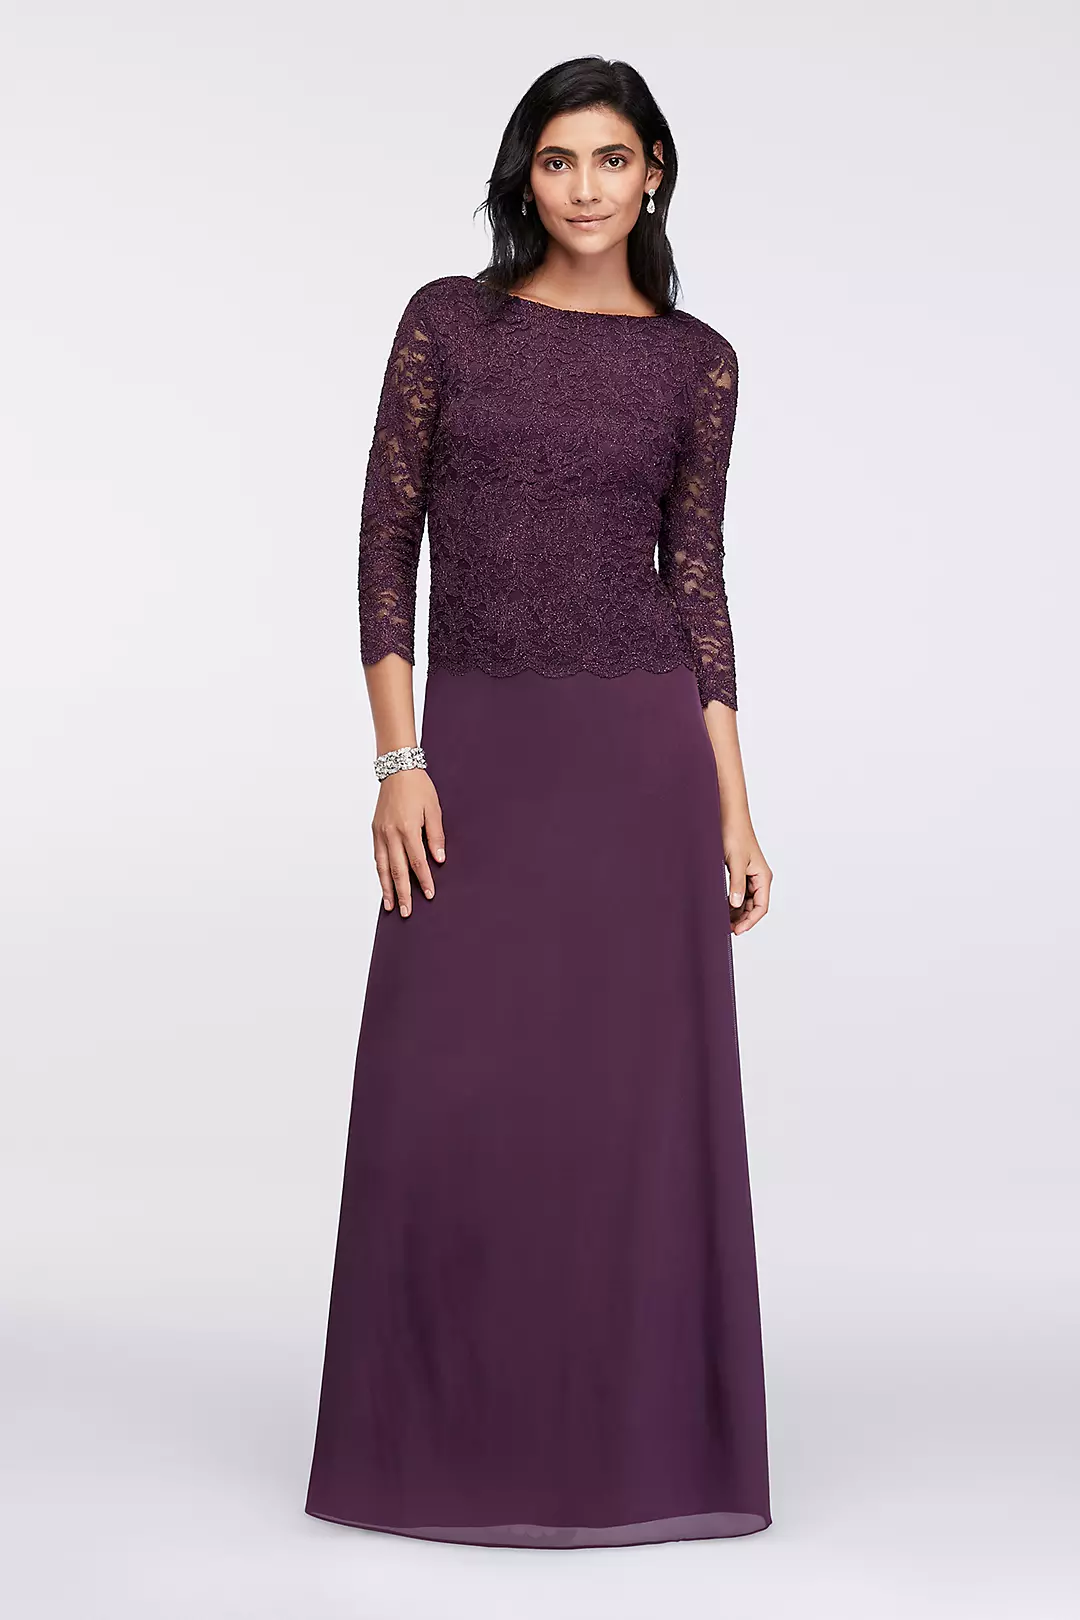 Long-Sleeve Lace Bodice Dress with Bateau Neckline Image